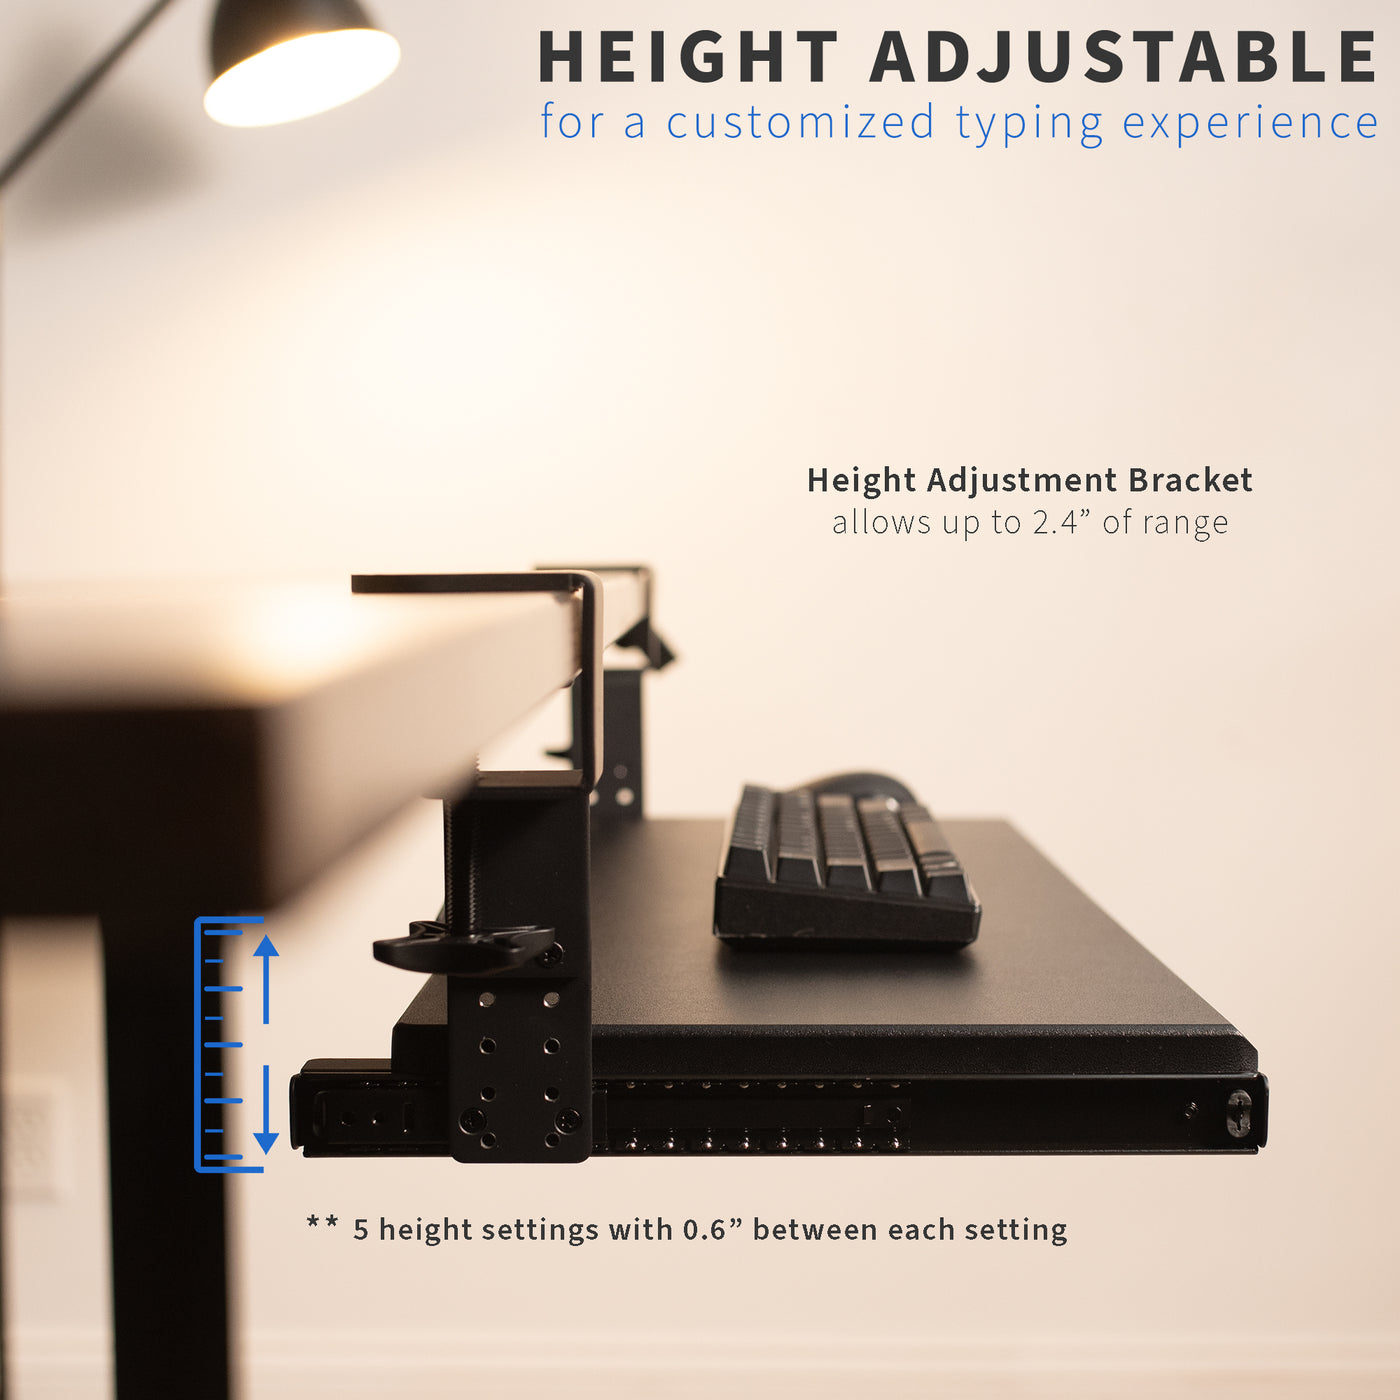 Adjustable Monitor Arm with Keyboard Tray (Vamonitor) 60118-563